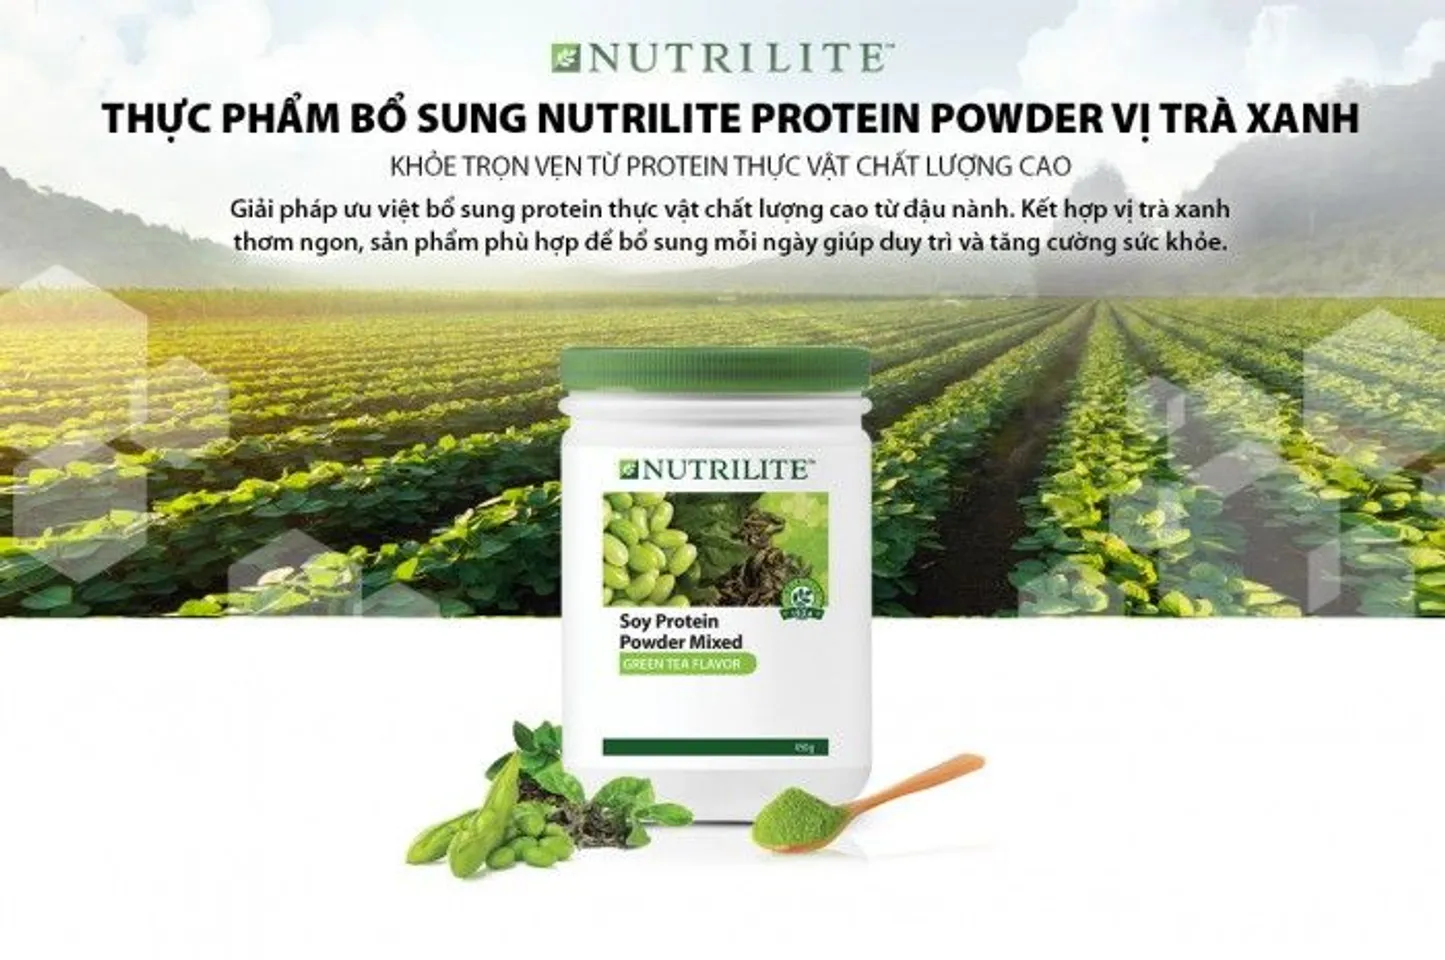 TPBS Nutrilite Protein Powder Amway - vị trà xanh 1